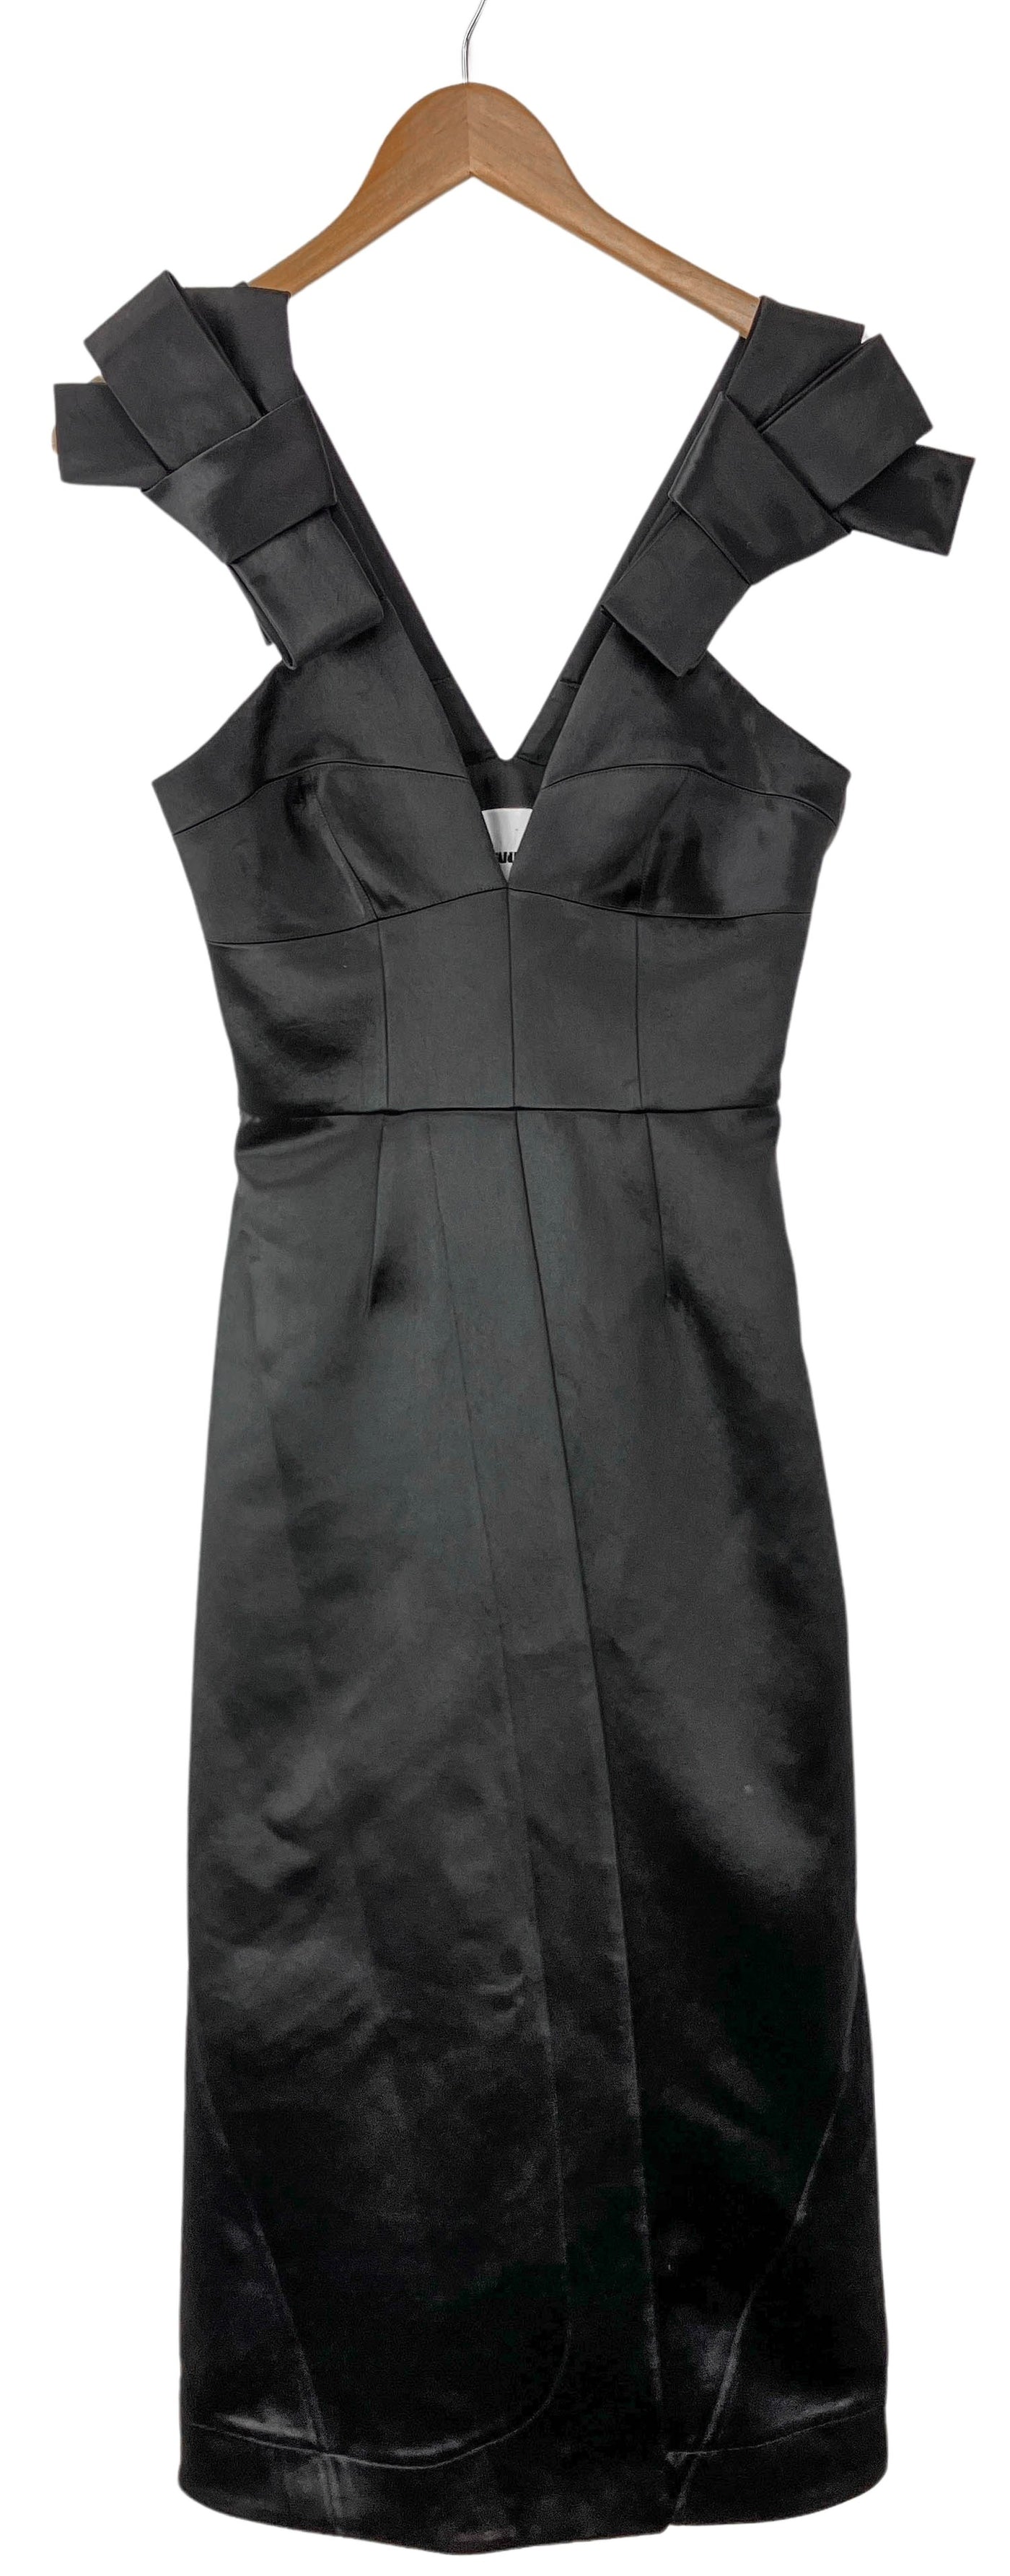 Jil Sander Heavy Shiny Bonded Satin Dress in Black - Discounts on Jil Sander at UAL